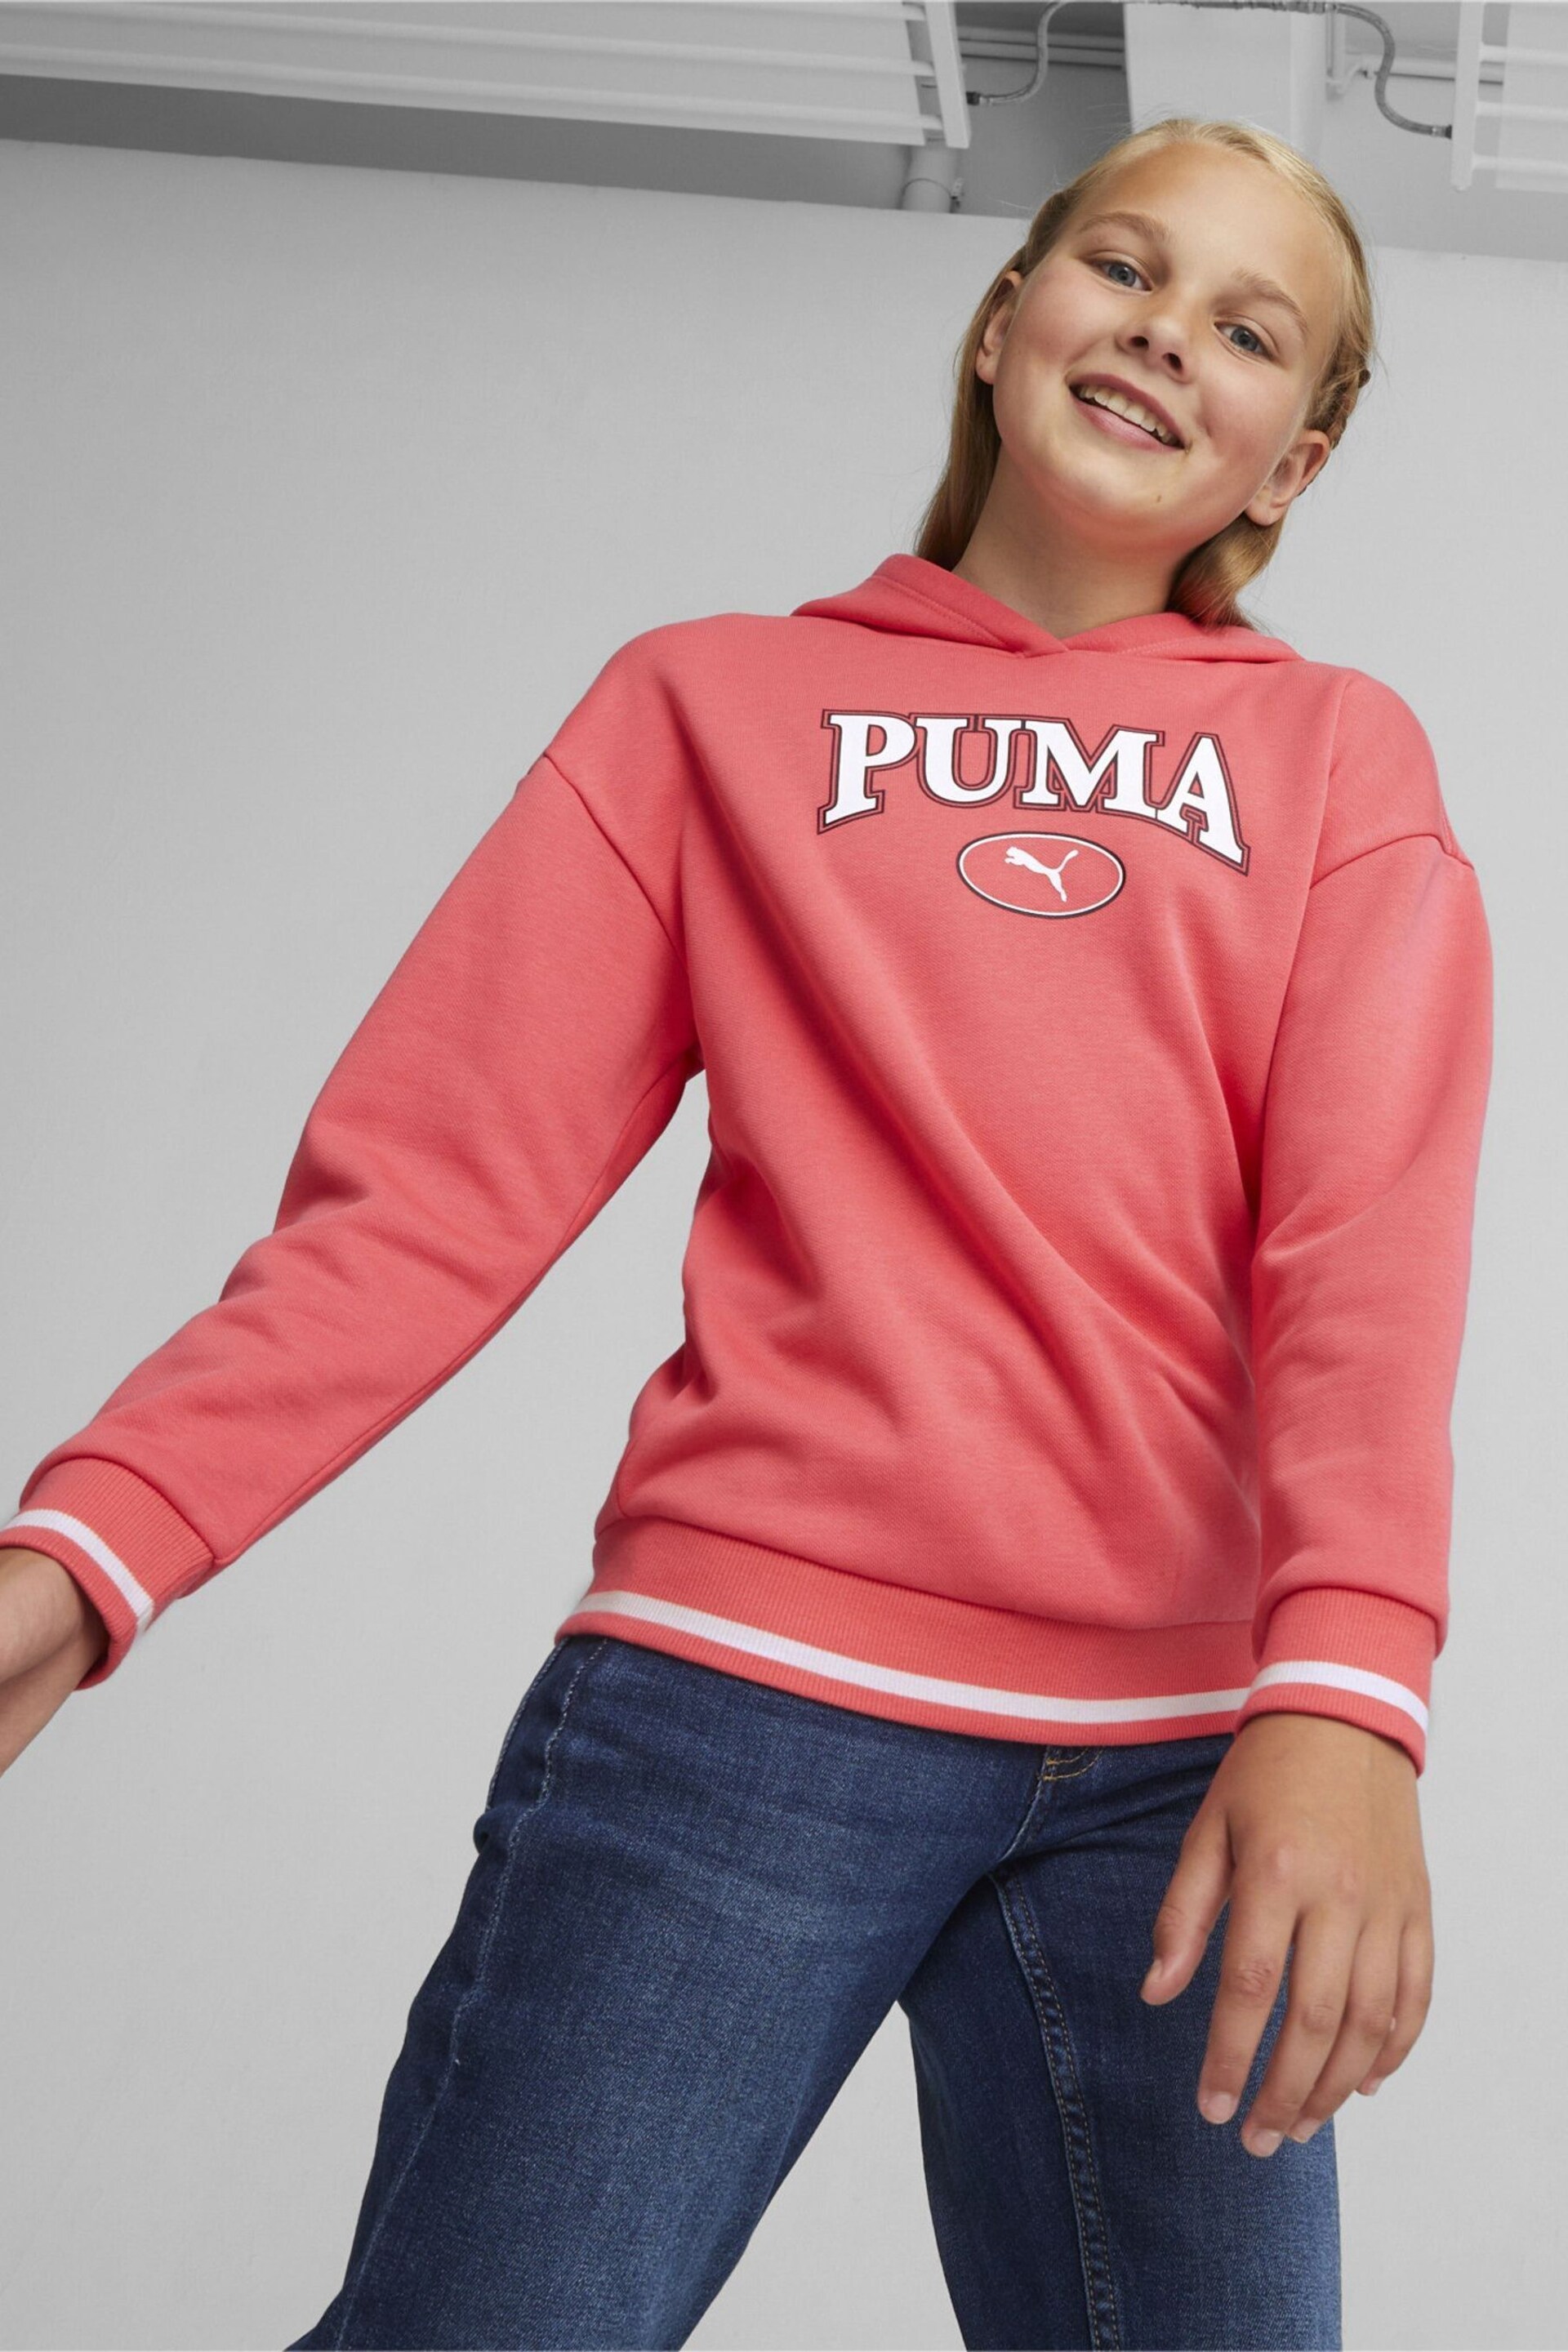 Puma Pink Youth Hoodie - Image 1 of 5